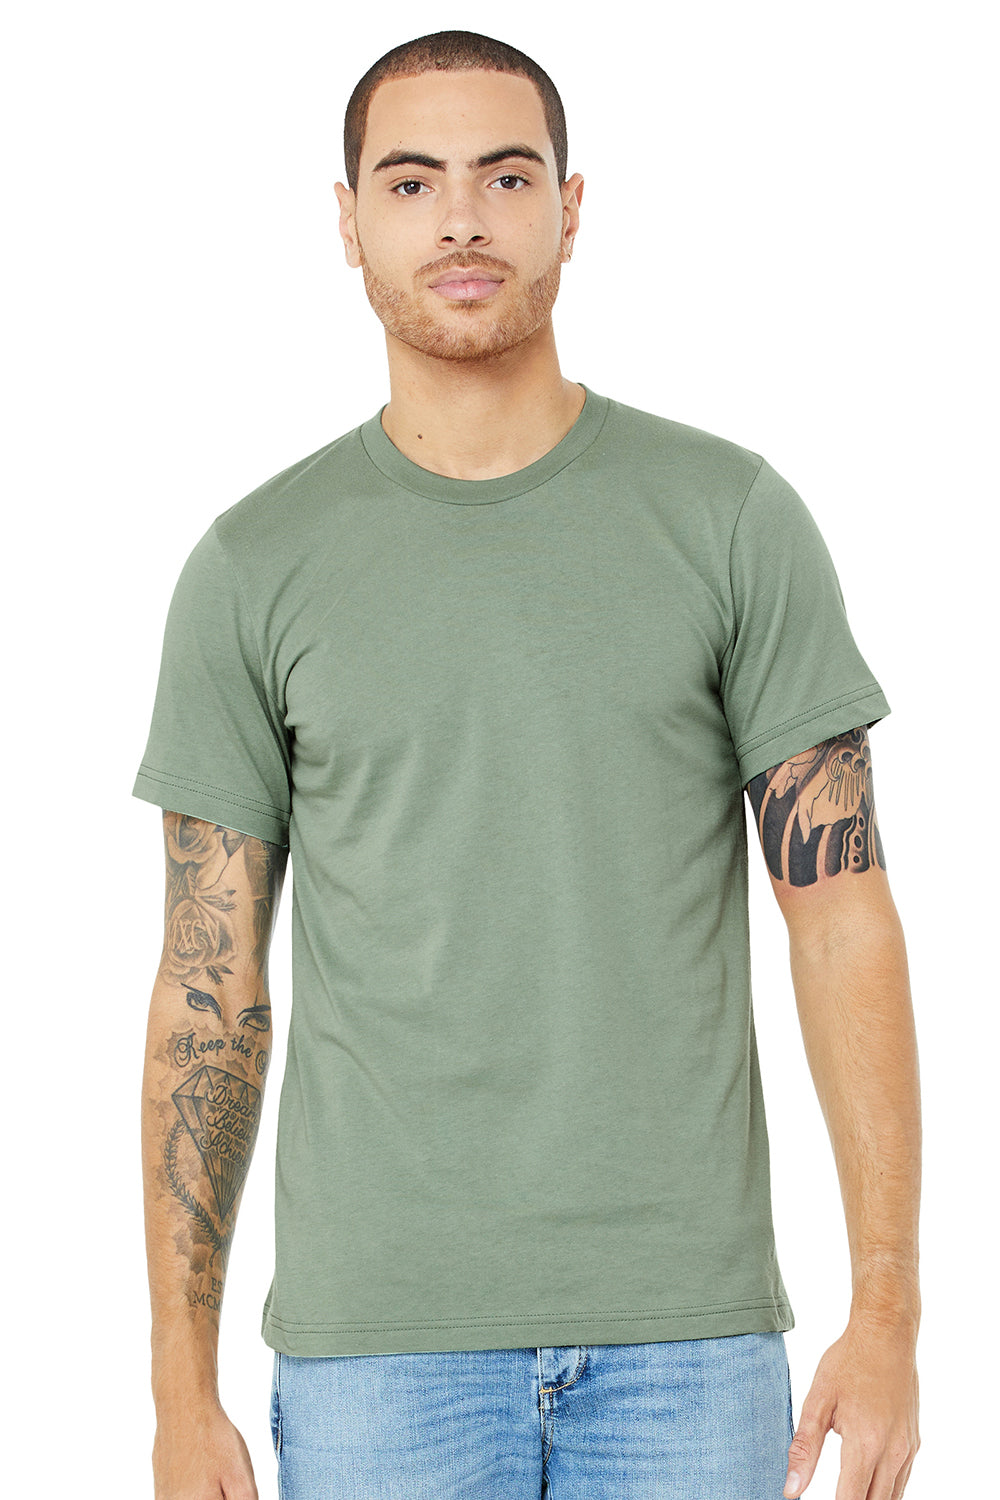 Bella + Canvas BC3001/3001C Mens Jersey Short Sleeve Crewneck T-Shirt Sage Green Model Front